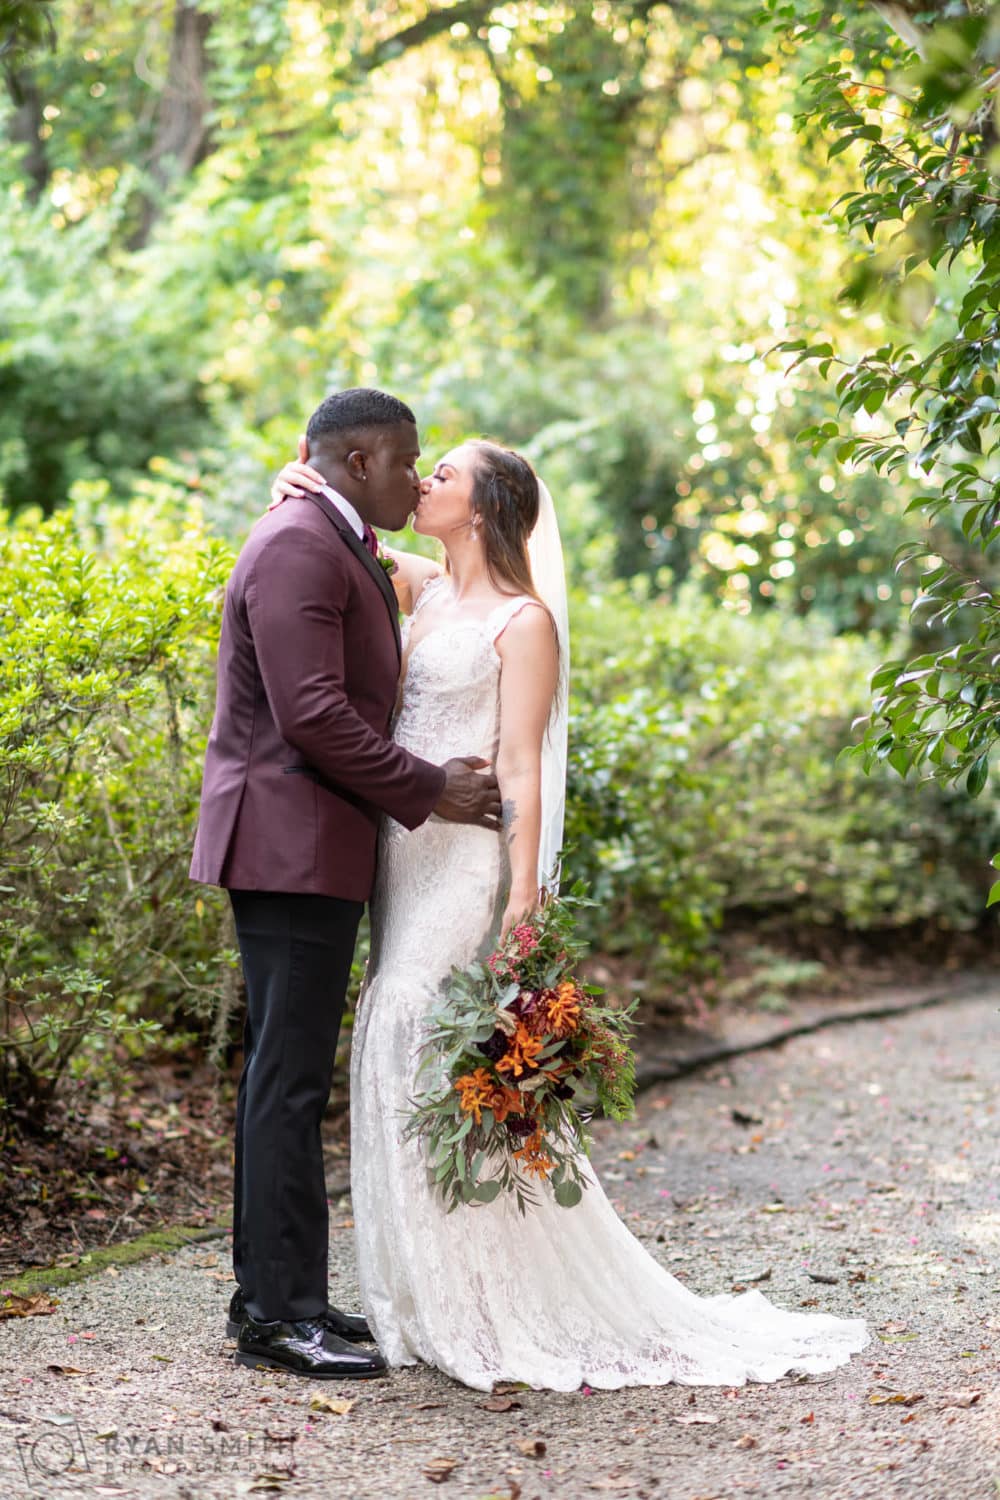 Kiss in the gardens - Magnolia Plantation - Charleston, SC